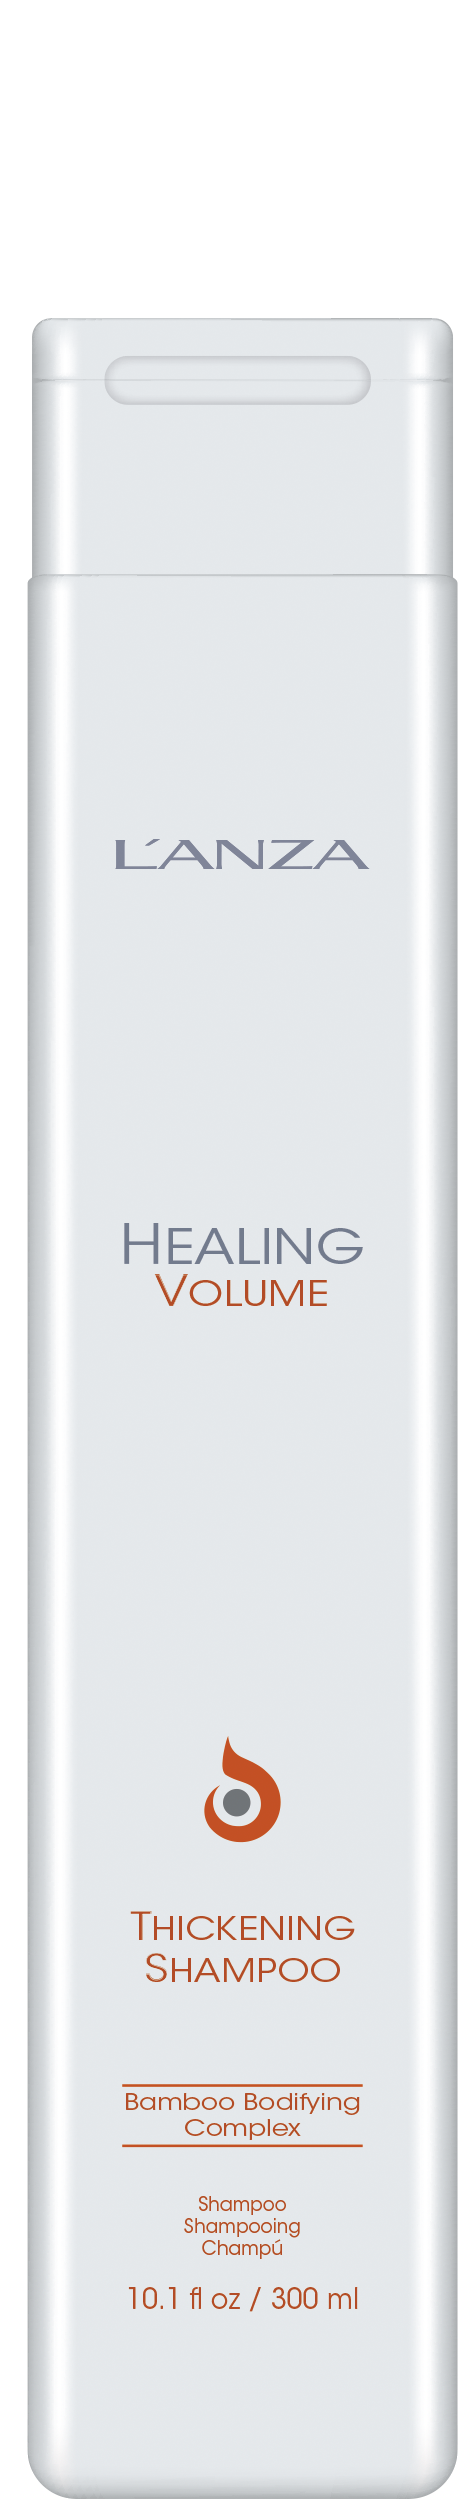 L'ANZA Healing Volume Shampoo